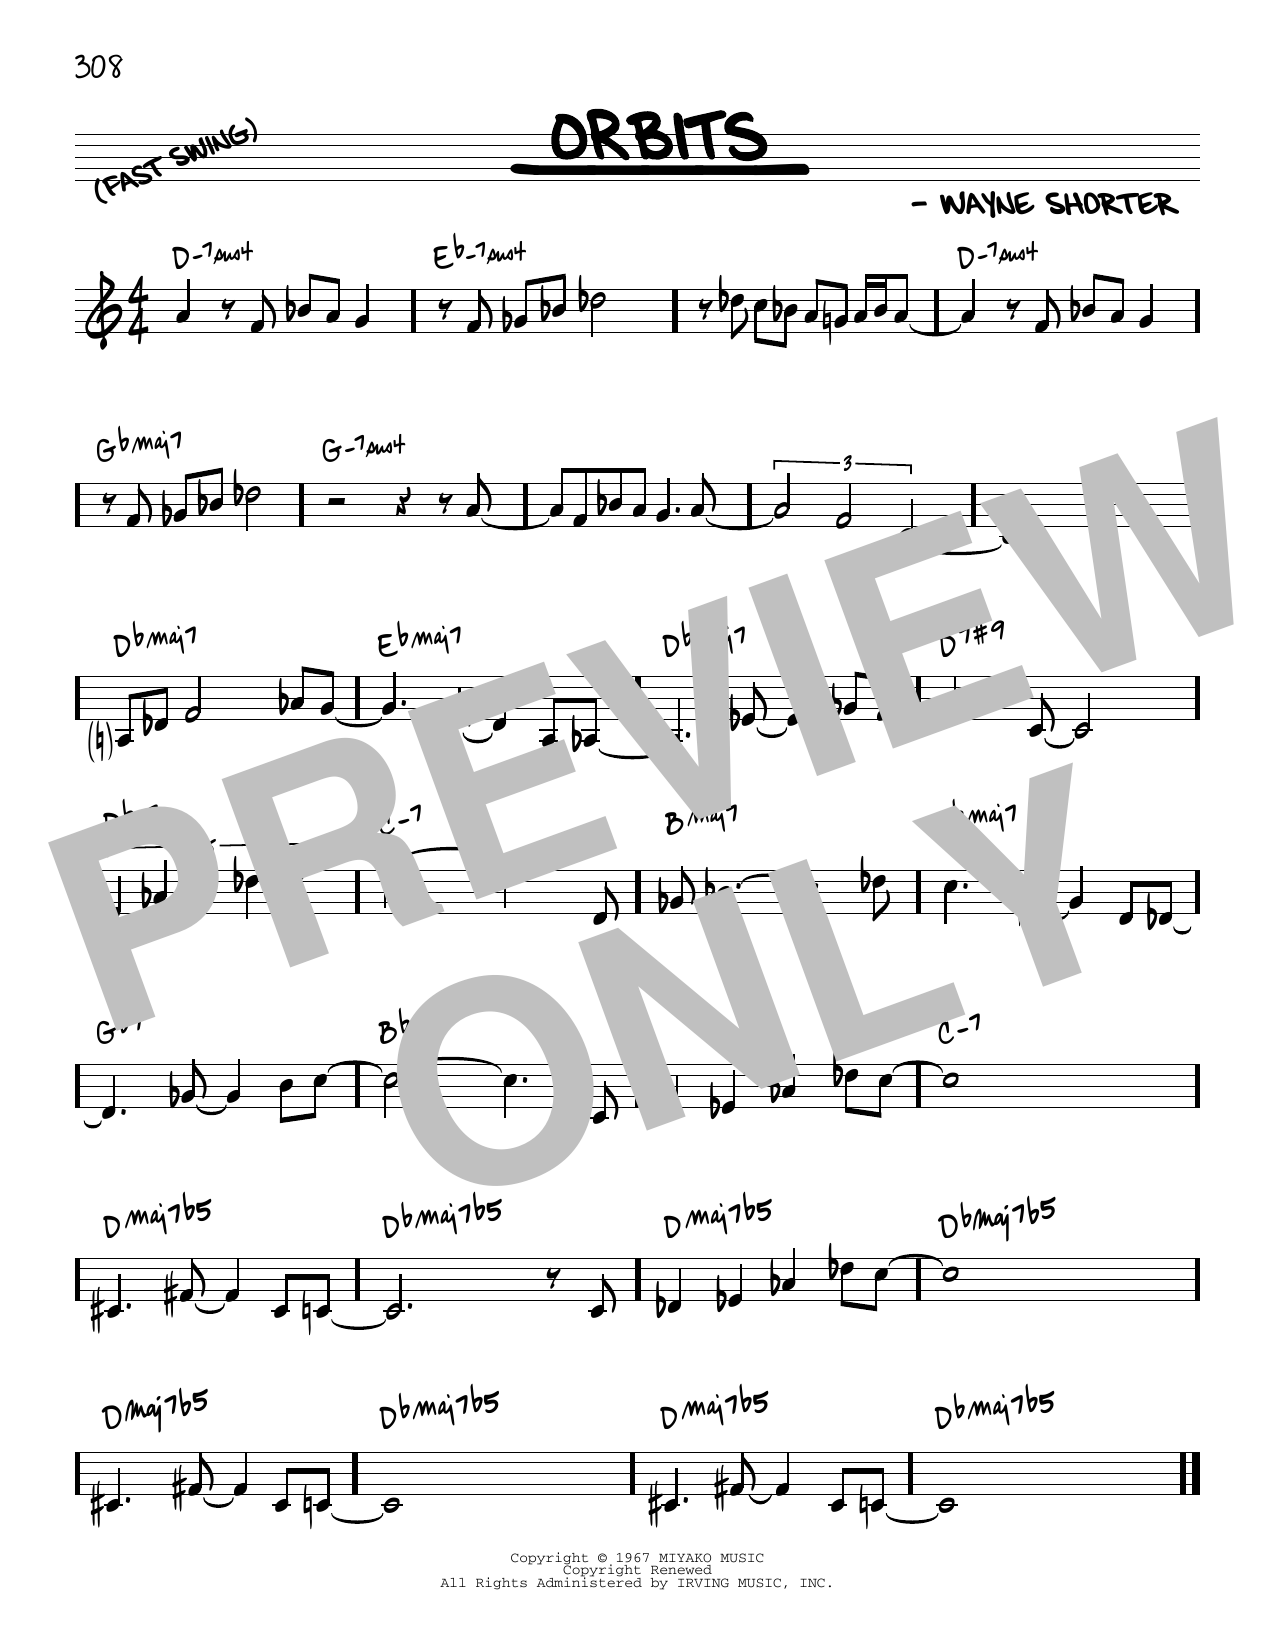 Wayne Shorter Orbits [Reharmonized version] (arr. Jack Grassel) Sheet Music Notes & Chords for Real Book – Melody & Chords - Download or Print PDF